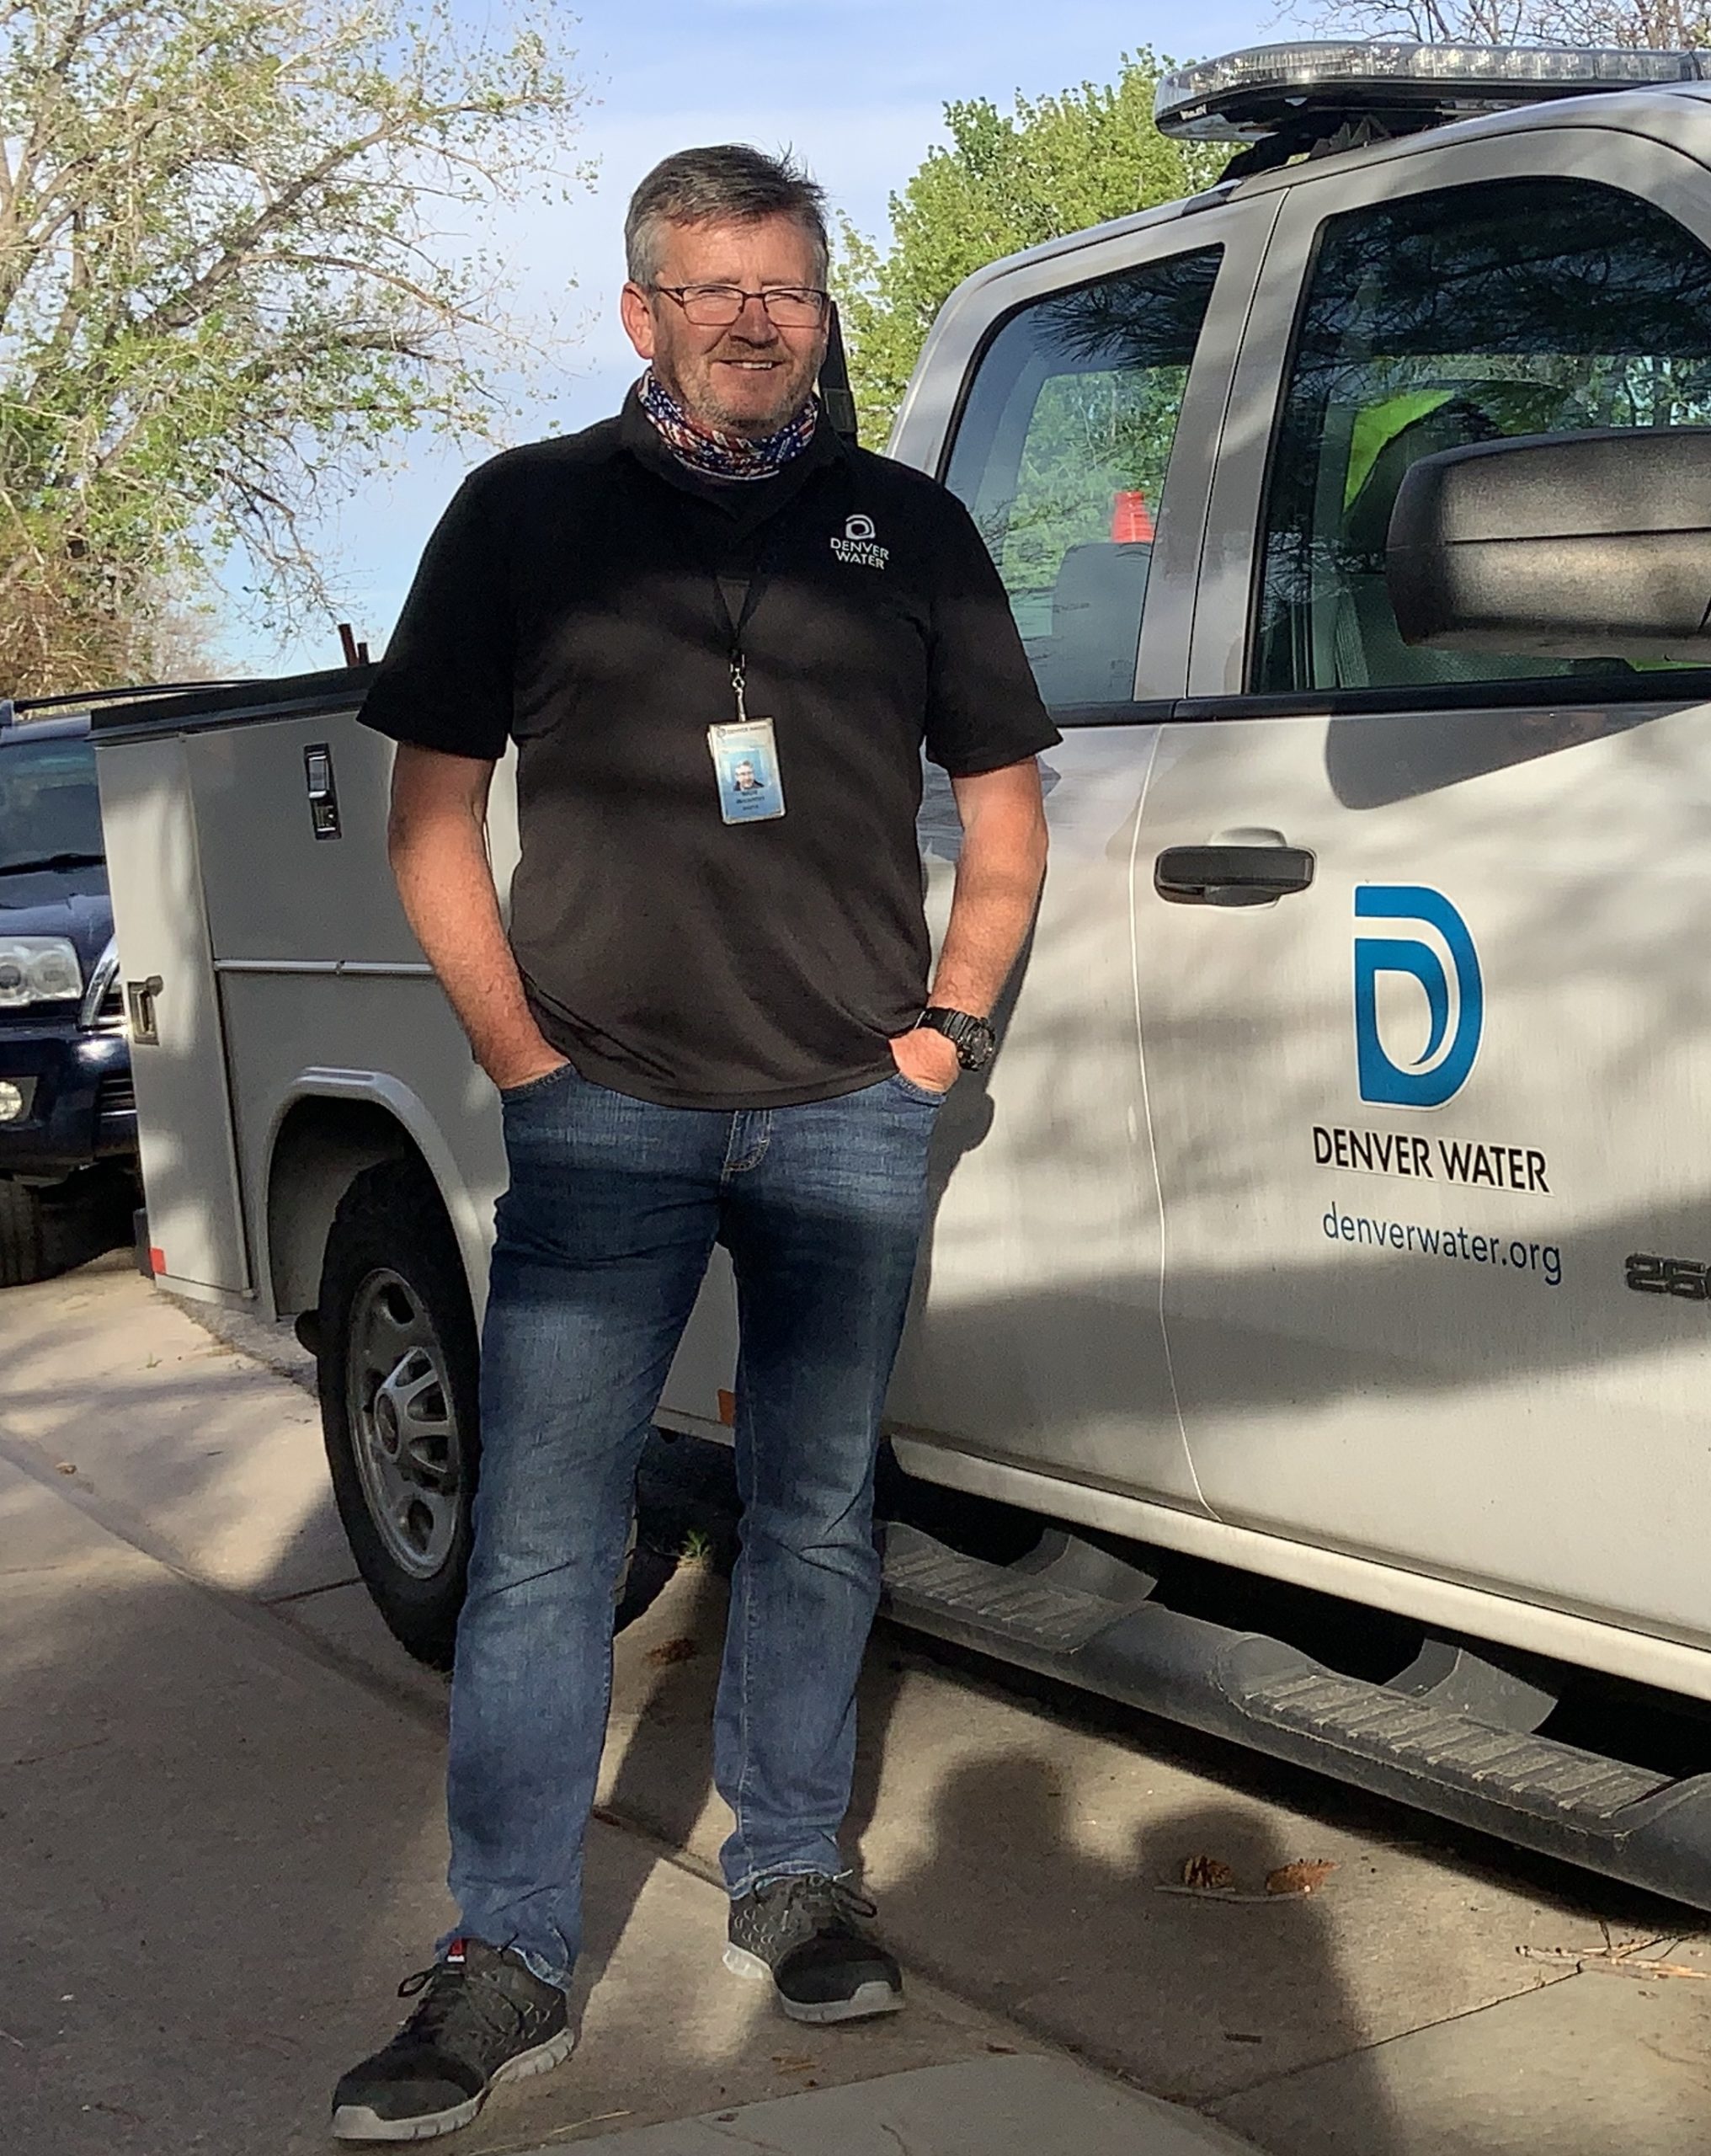 A man stands next to a Denver Water service vehicle.